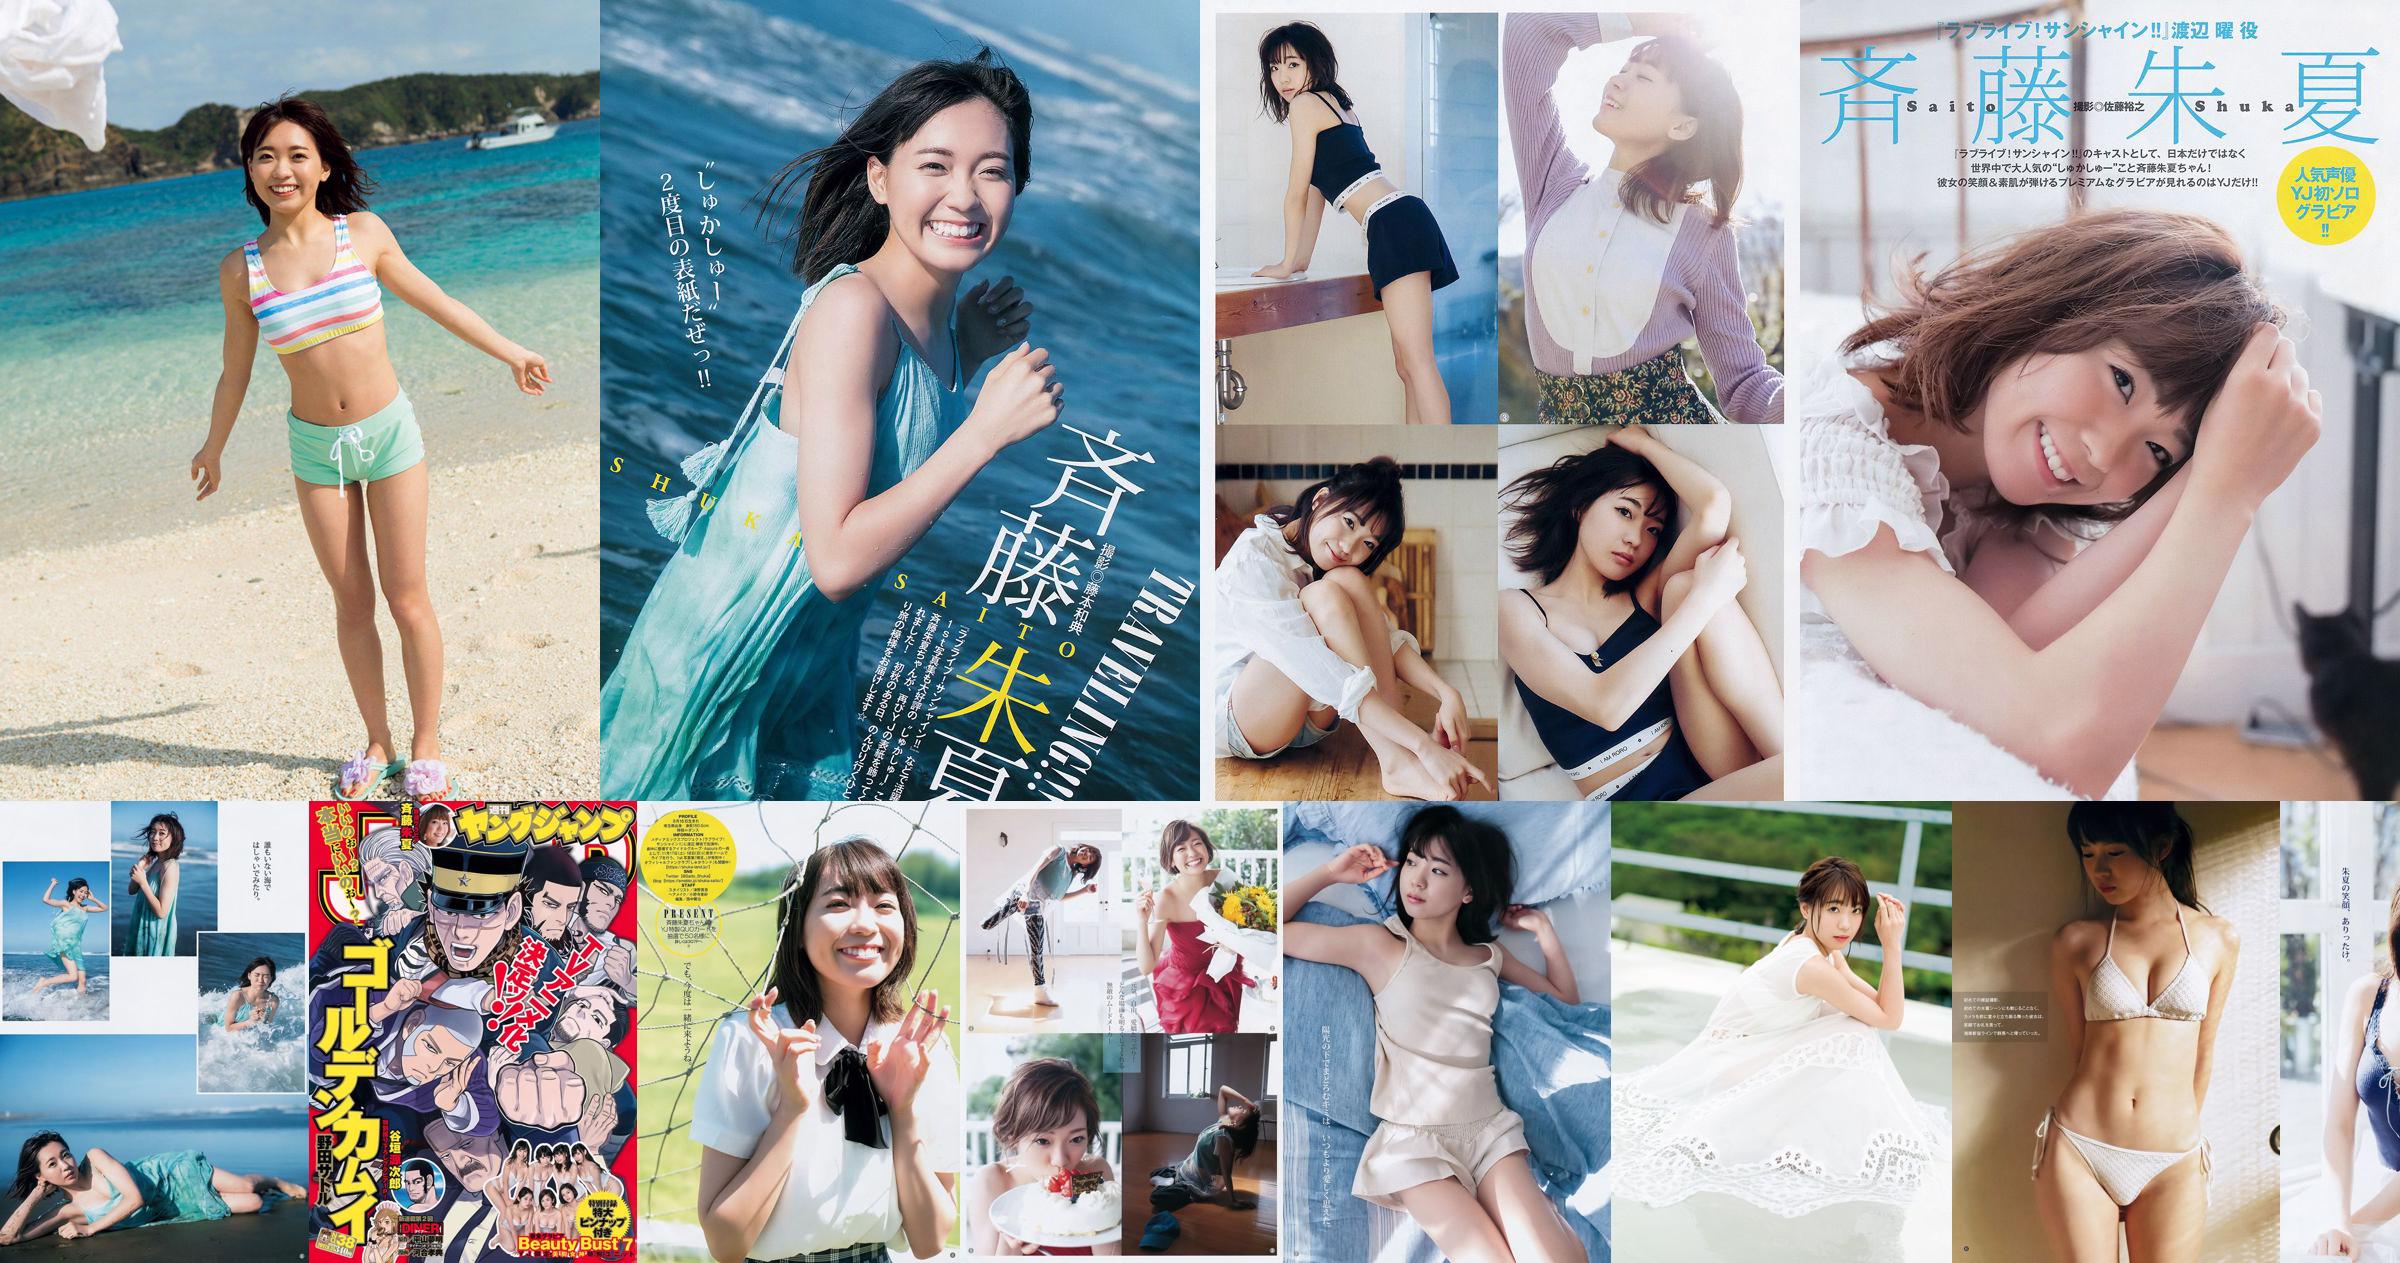 Ito Mirai Toyota Moeie Morisaki Tomomi [Weekly Young Jump] Tạp chí ảnh số 47 năm 2018 No.743289 Trang 4